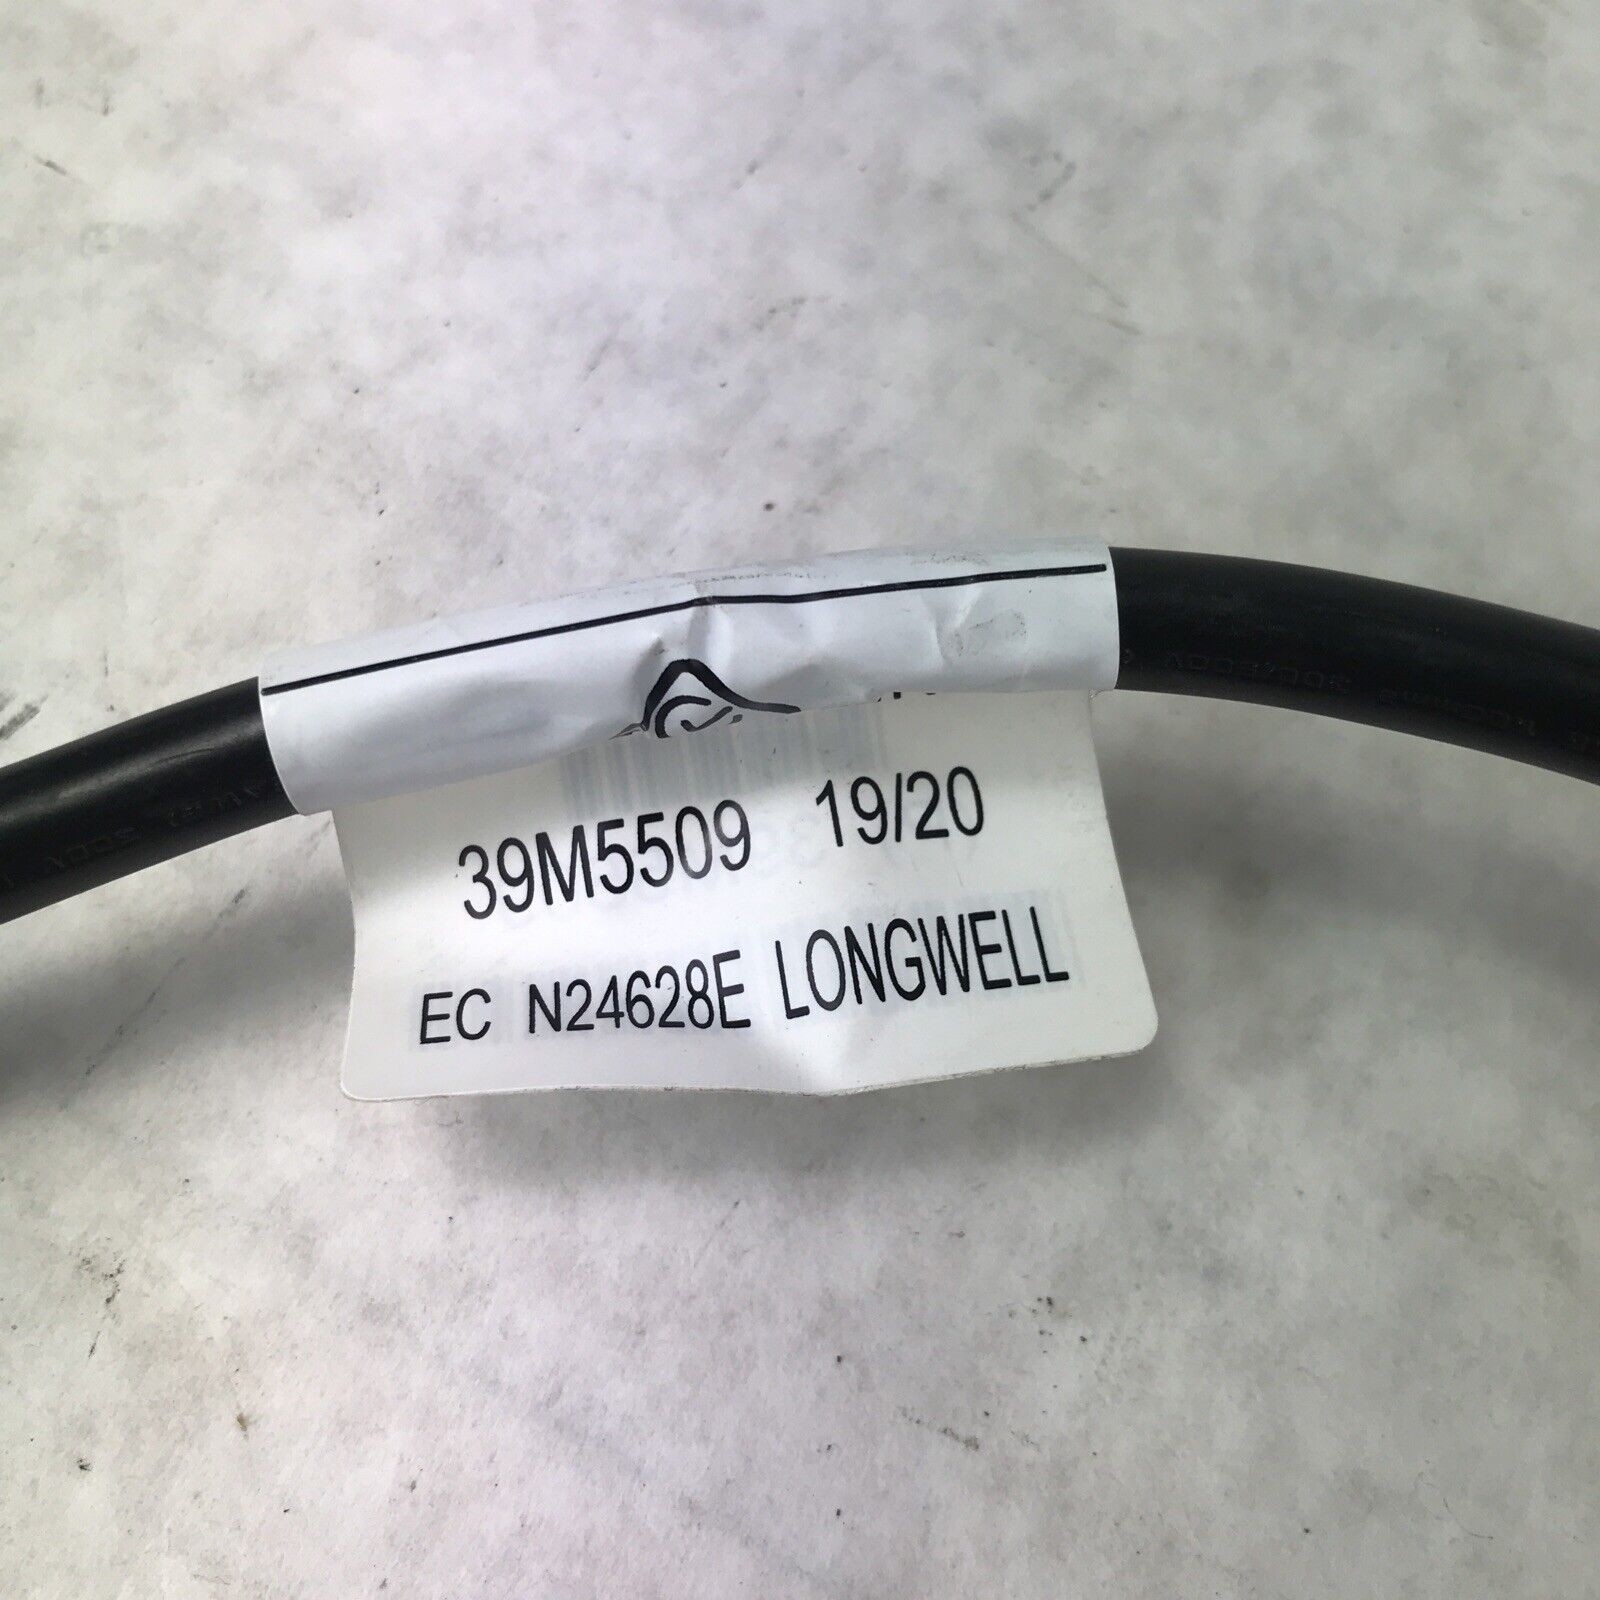 Longwell 39M5377 10ft 3 Prong Extension Cord EC N24628E